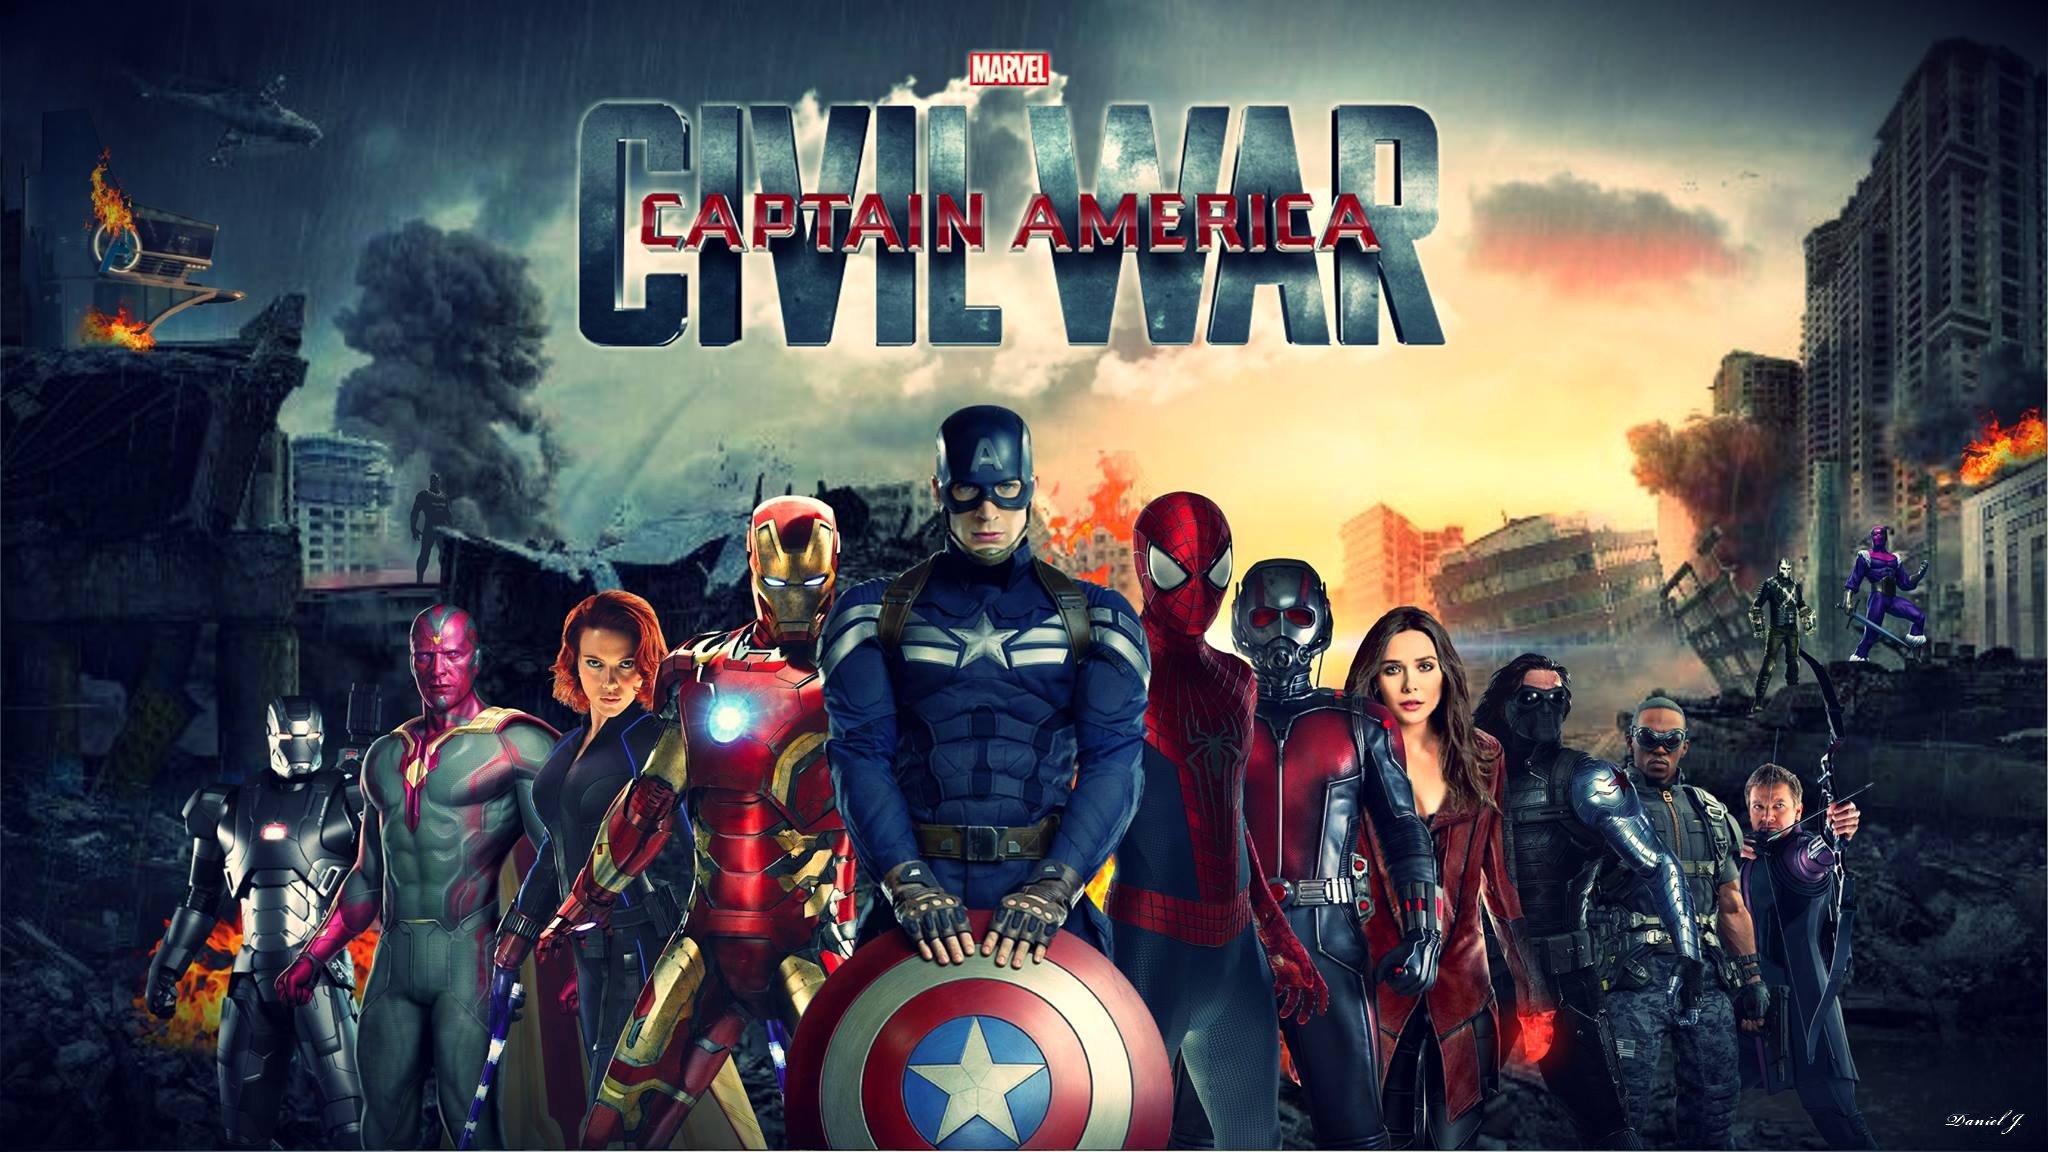 Amazing Captain America Civil War Posters